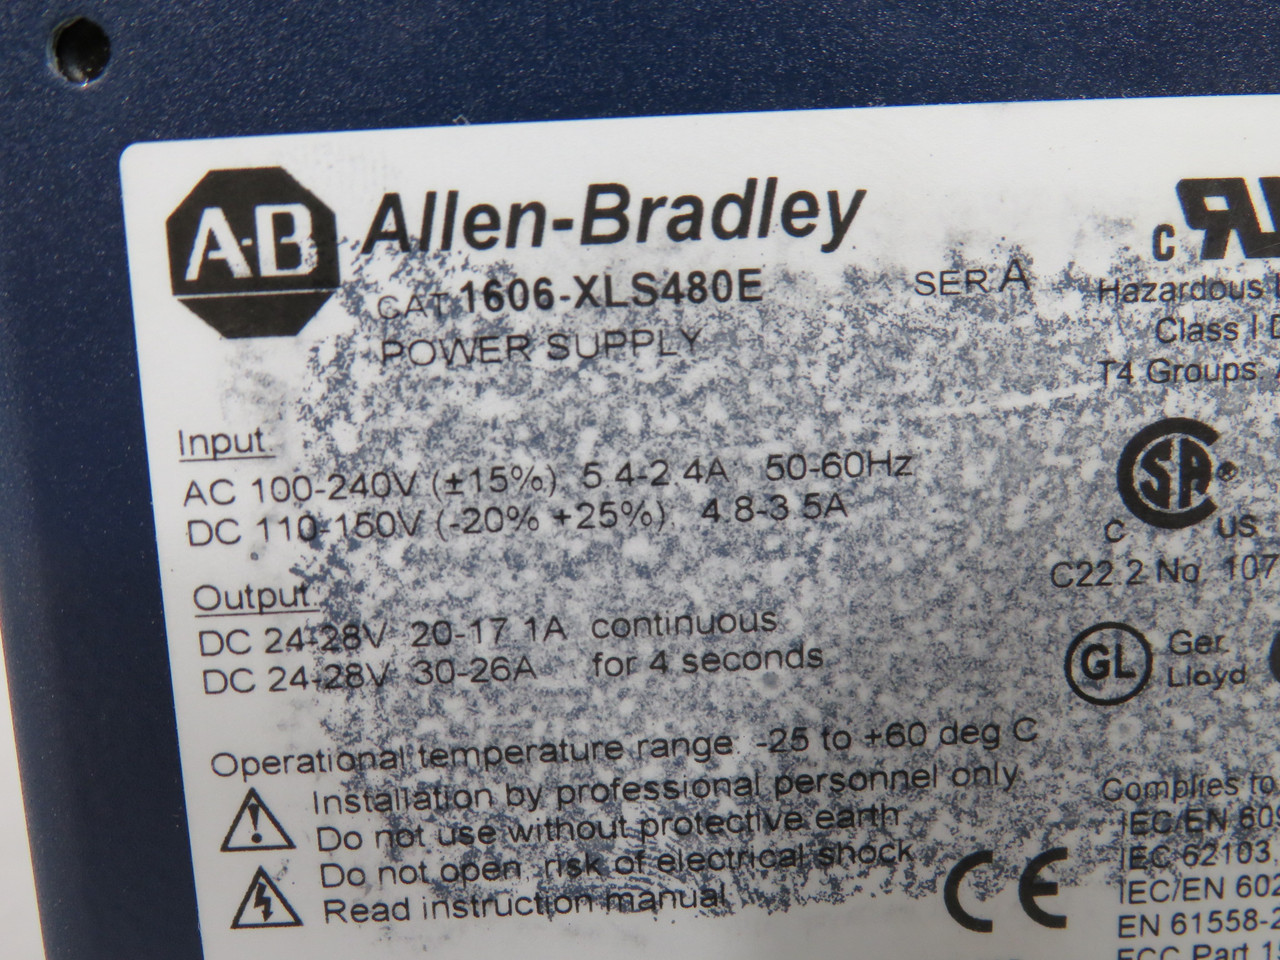 Allen-Bradley 1606-XLS480E Ser A Power Supply Out: 24-28V 20-17.1A/30-26A USED